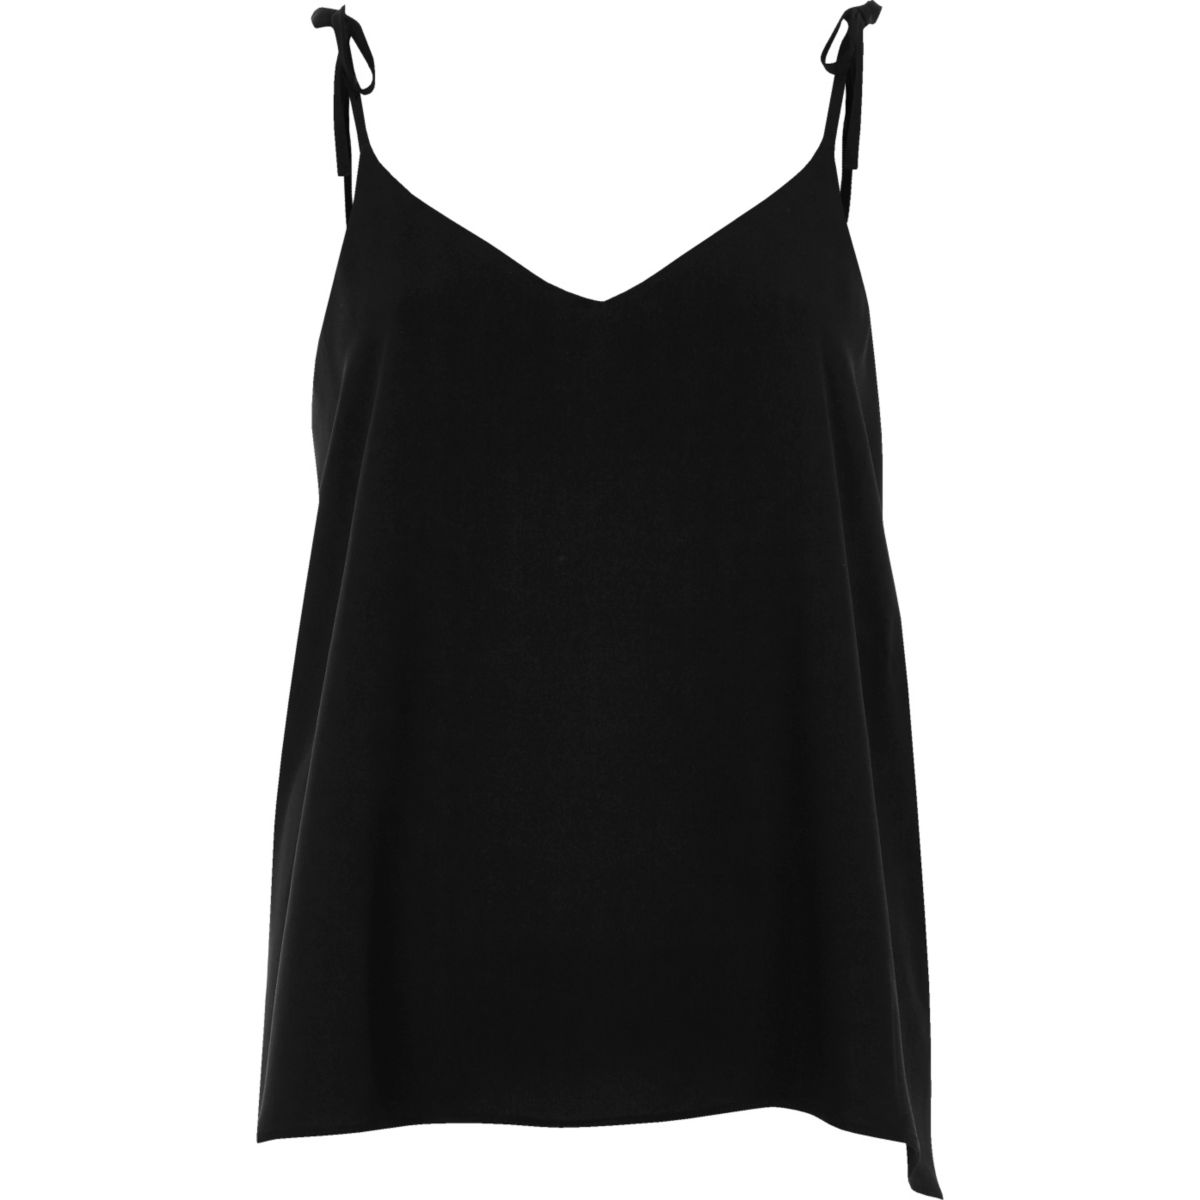 Black bow shoulder cami top - Cami / Sleeveless Tops - Tops - women